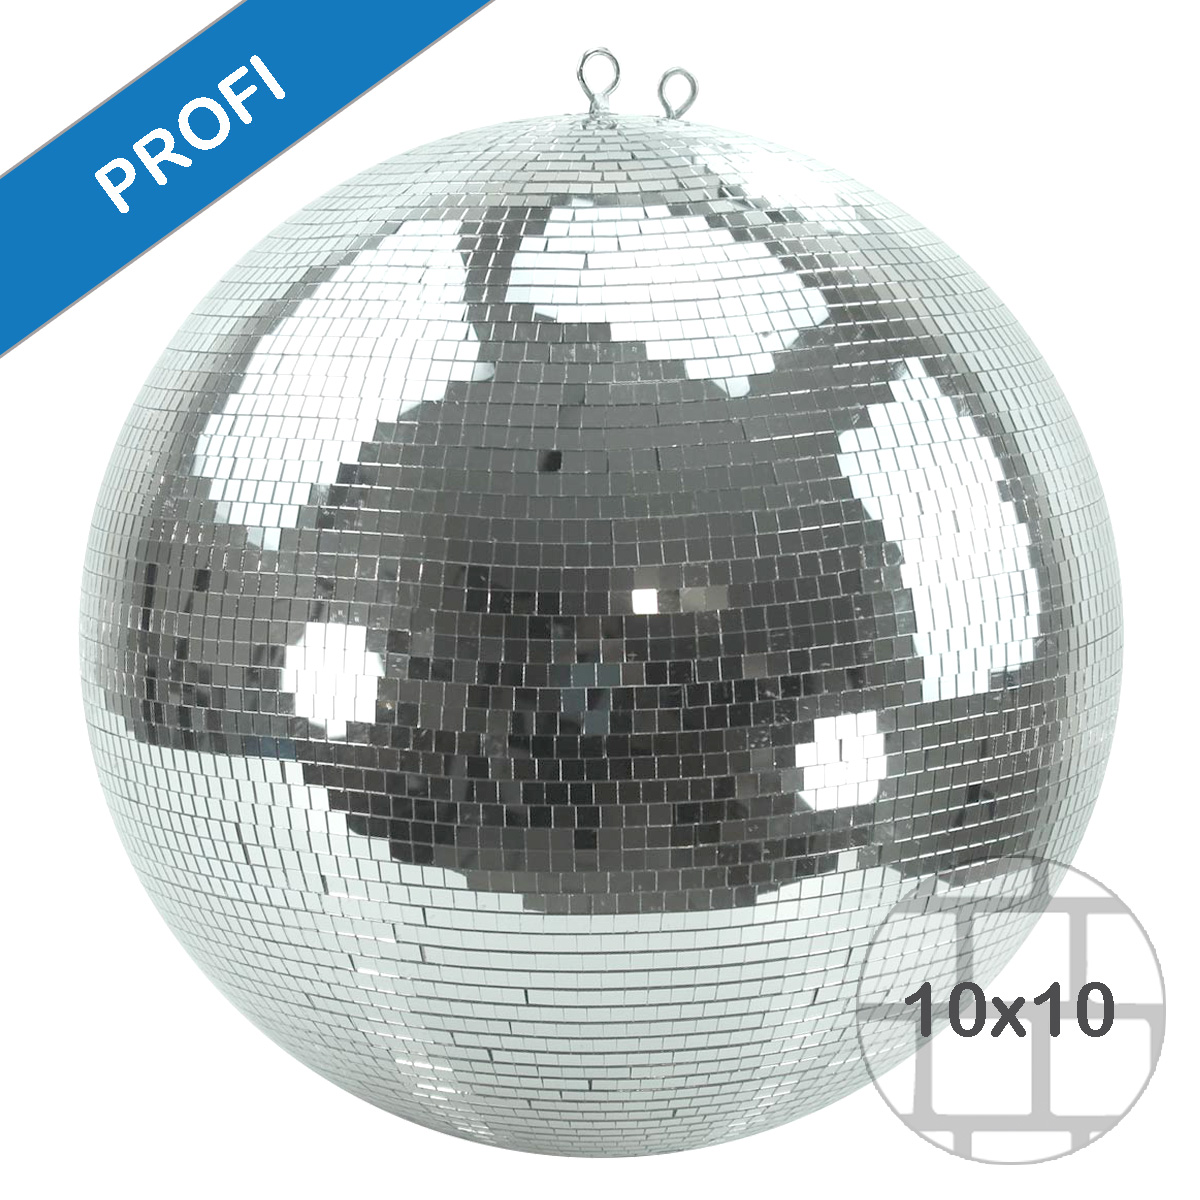 Spiegelkugel 75cm silber chrom- Diskokugel (Discokugel) Party Lichteffekt - Echtglas - mirrorball safety silver chrome color